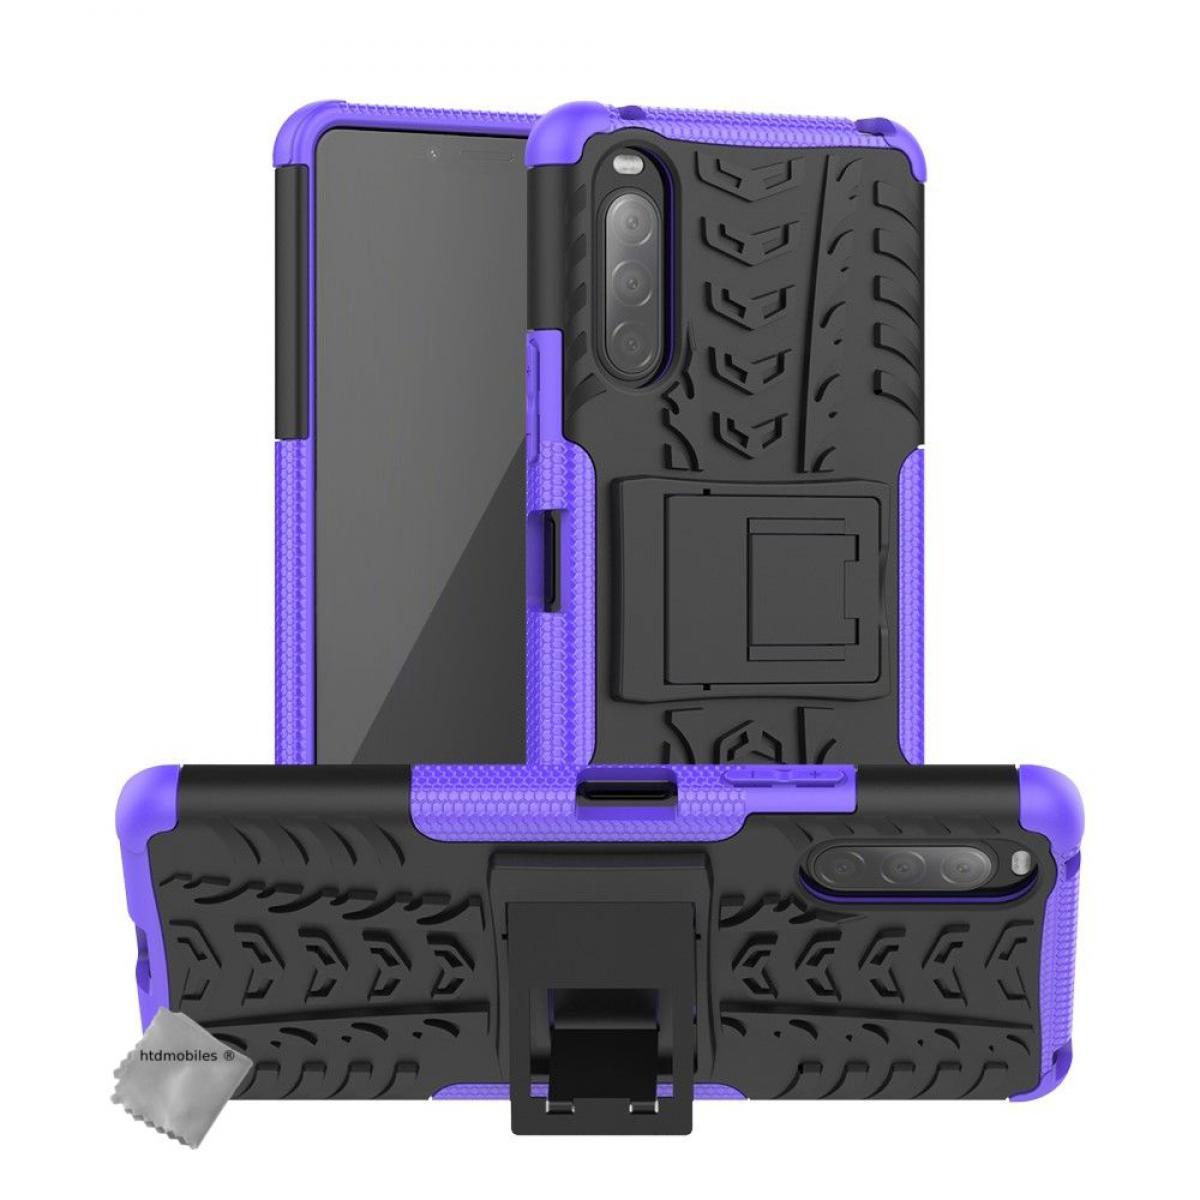 Htdmobiles - Housse etui coque rigide anti choc pour Sony Xperia 10 II + film ecran - MAUVE - Autres accessoires smartphone